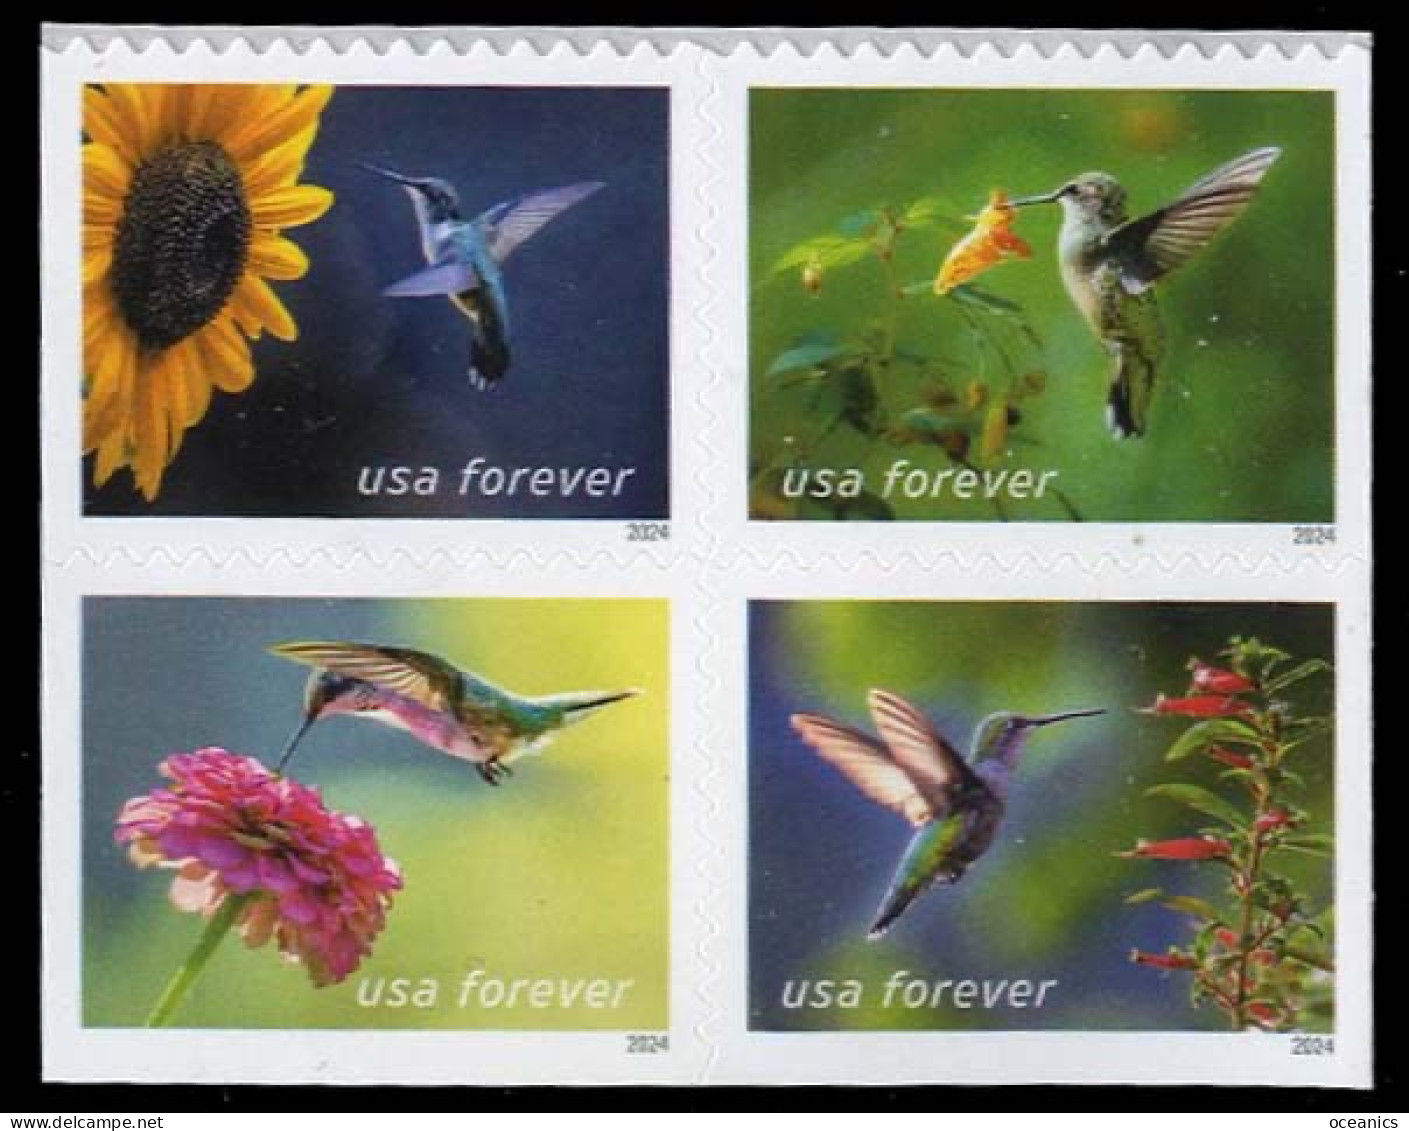 Etats-Unis / United States (Scott No.5848a - Garden Delights Forever Stamps) [**] Bloc Of 4 - Nuovi